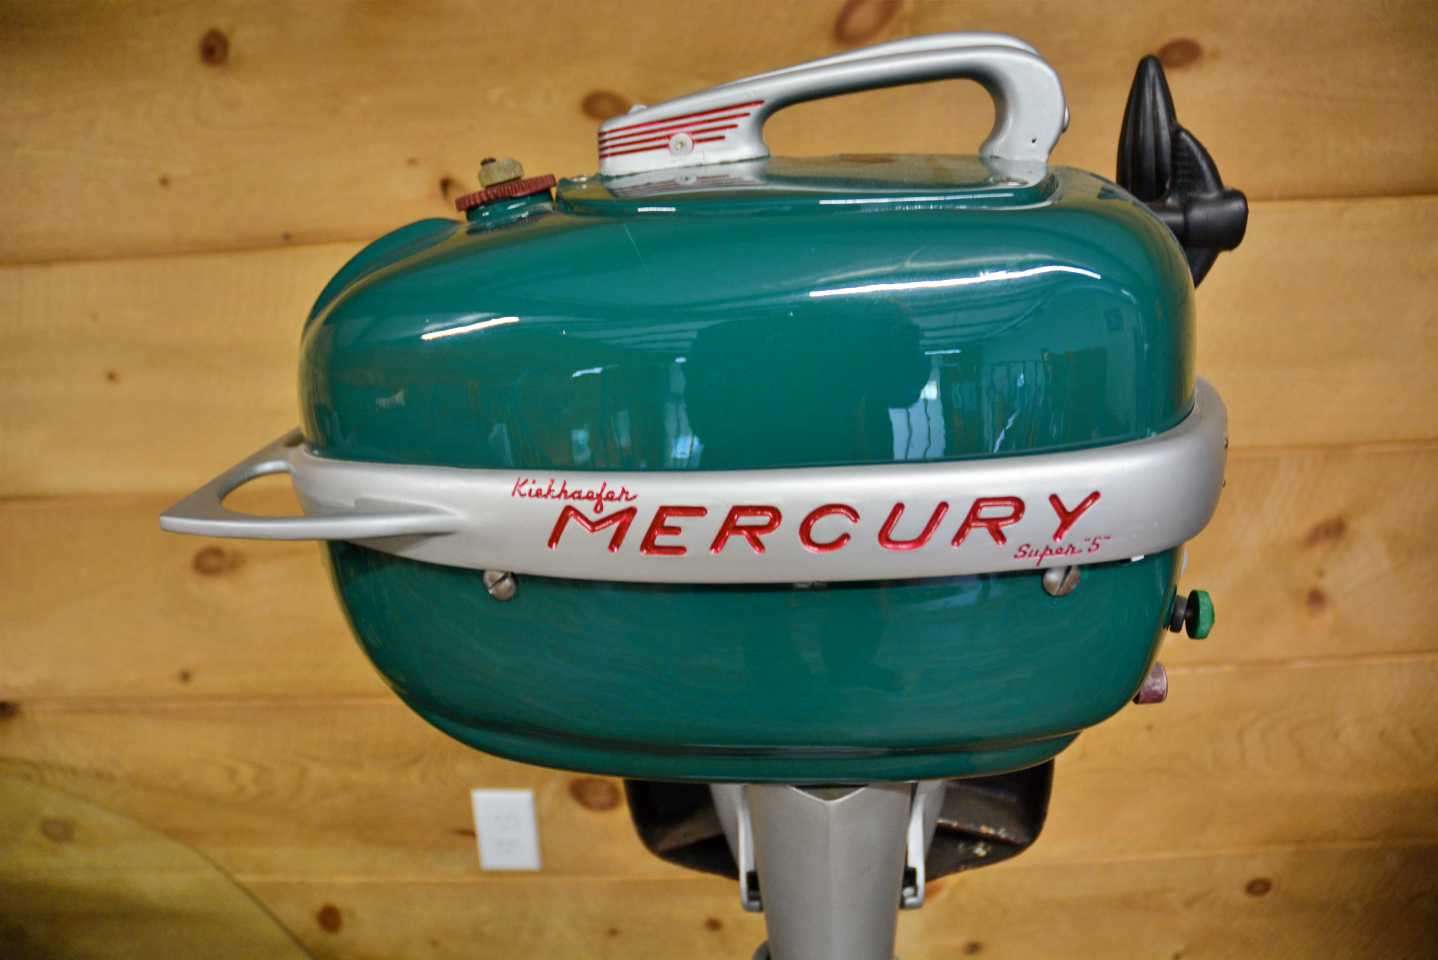 On the stand is a 1940s-era Kiekhaefer Mercury âSuper 5â outboard motor. 